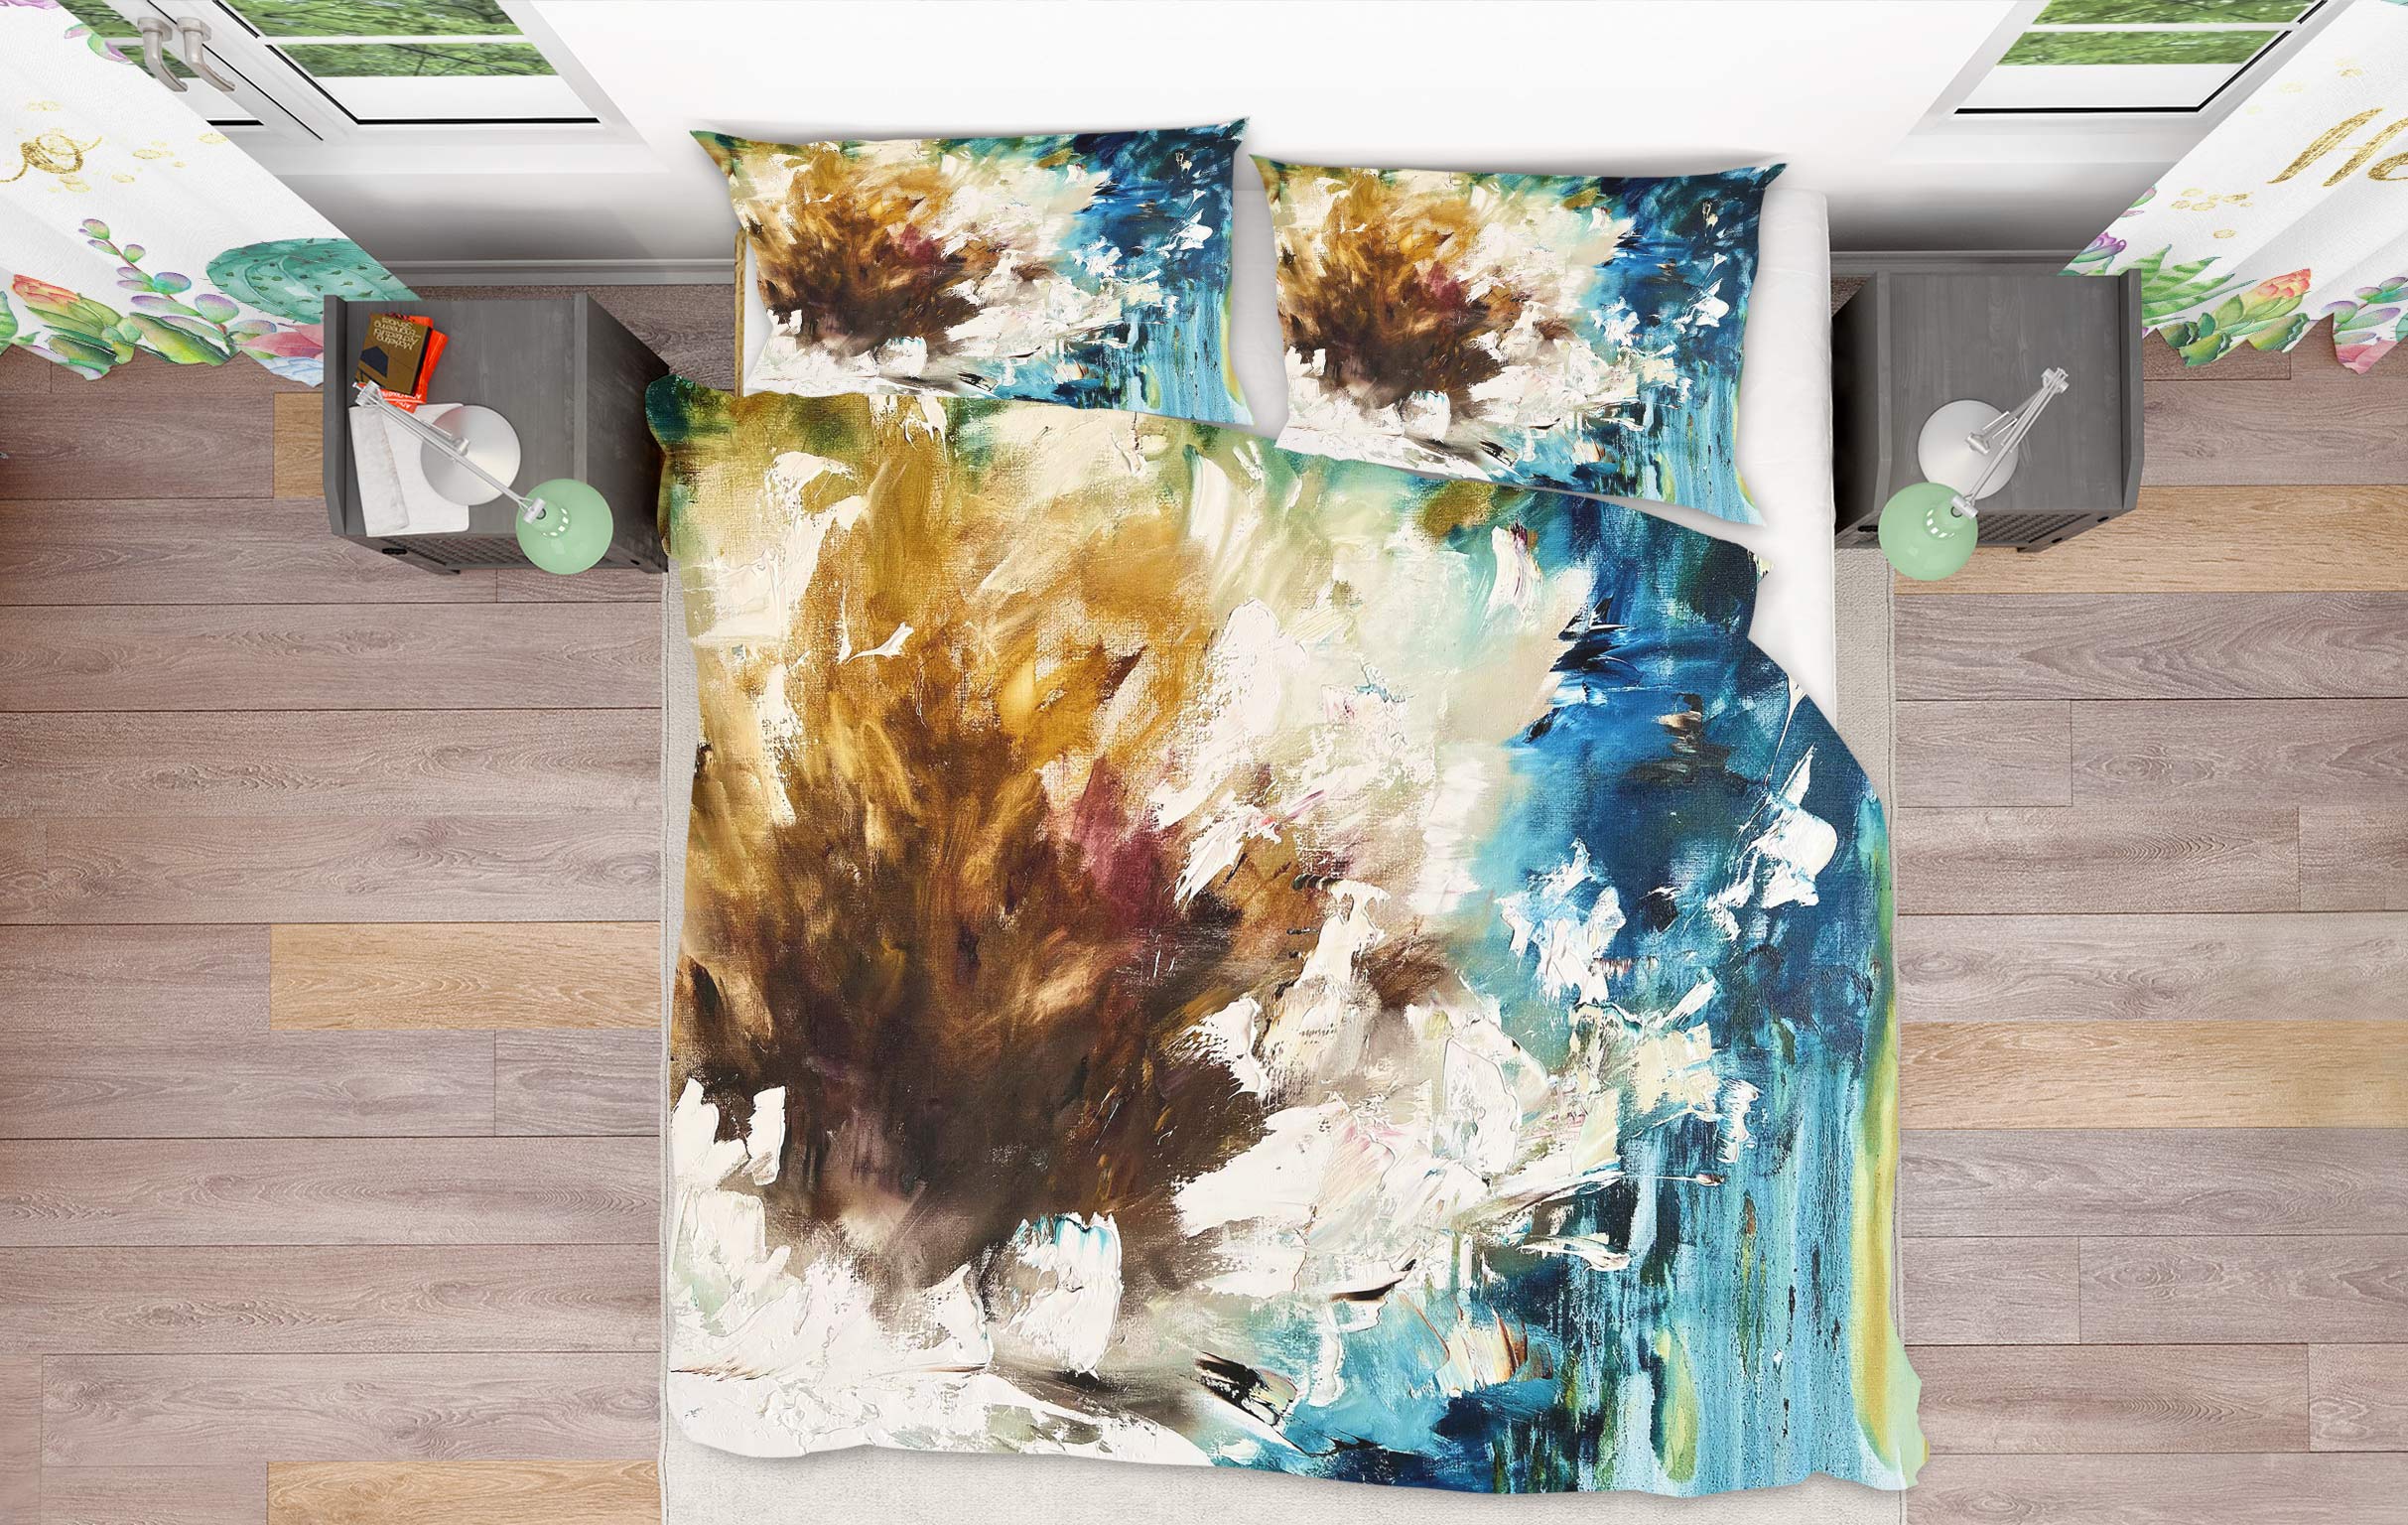 3D Painted Art 486 Skromova Marina Bedding Bed Pillowcases Quilt